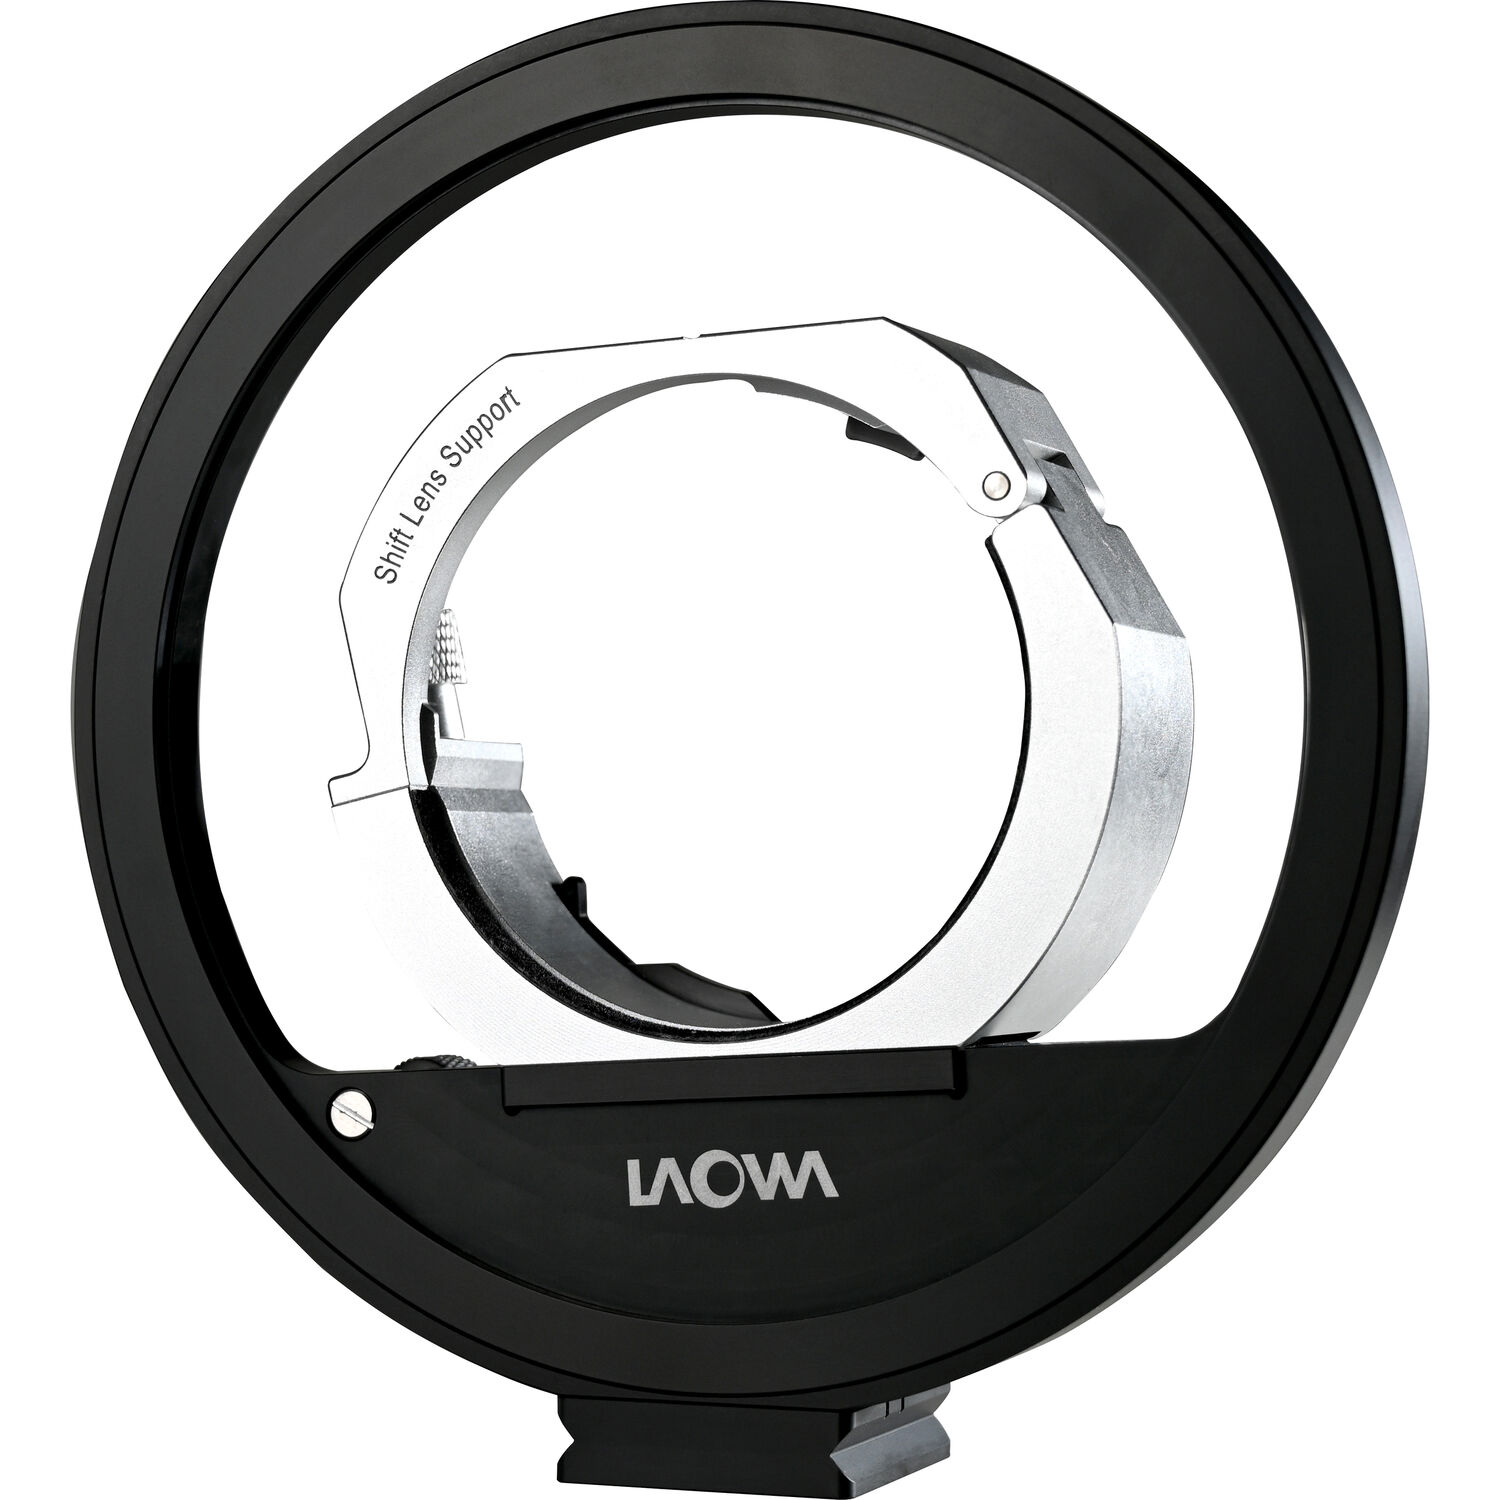 Venus Optics Shift Lens Support V2 for Laowa 15mm f/4.5 and Laowa 20mm f/4 Shift Lenses